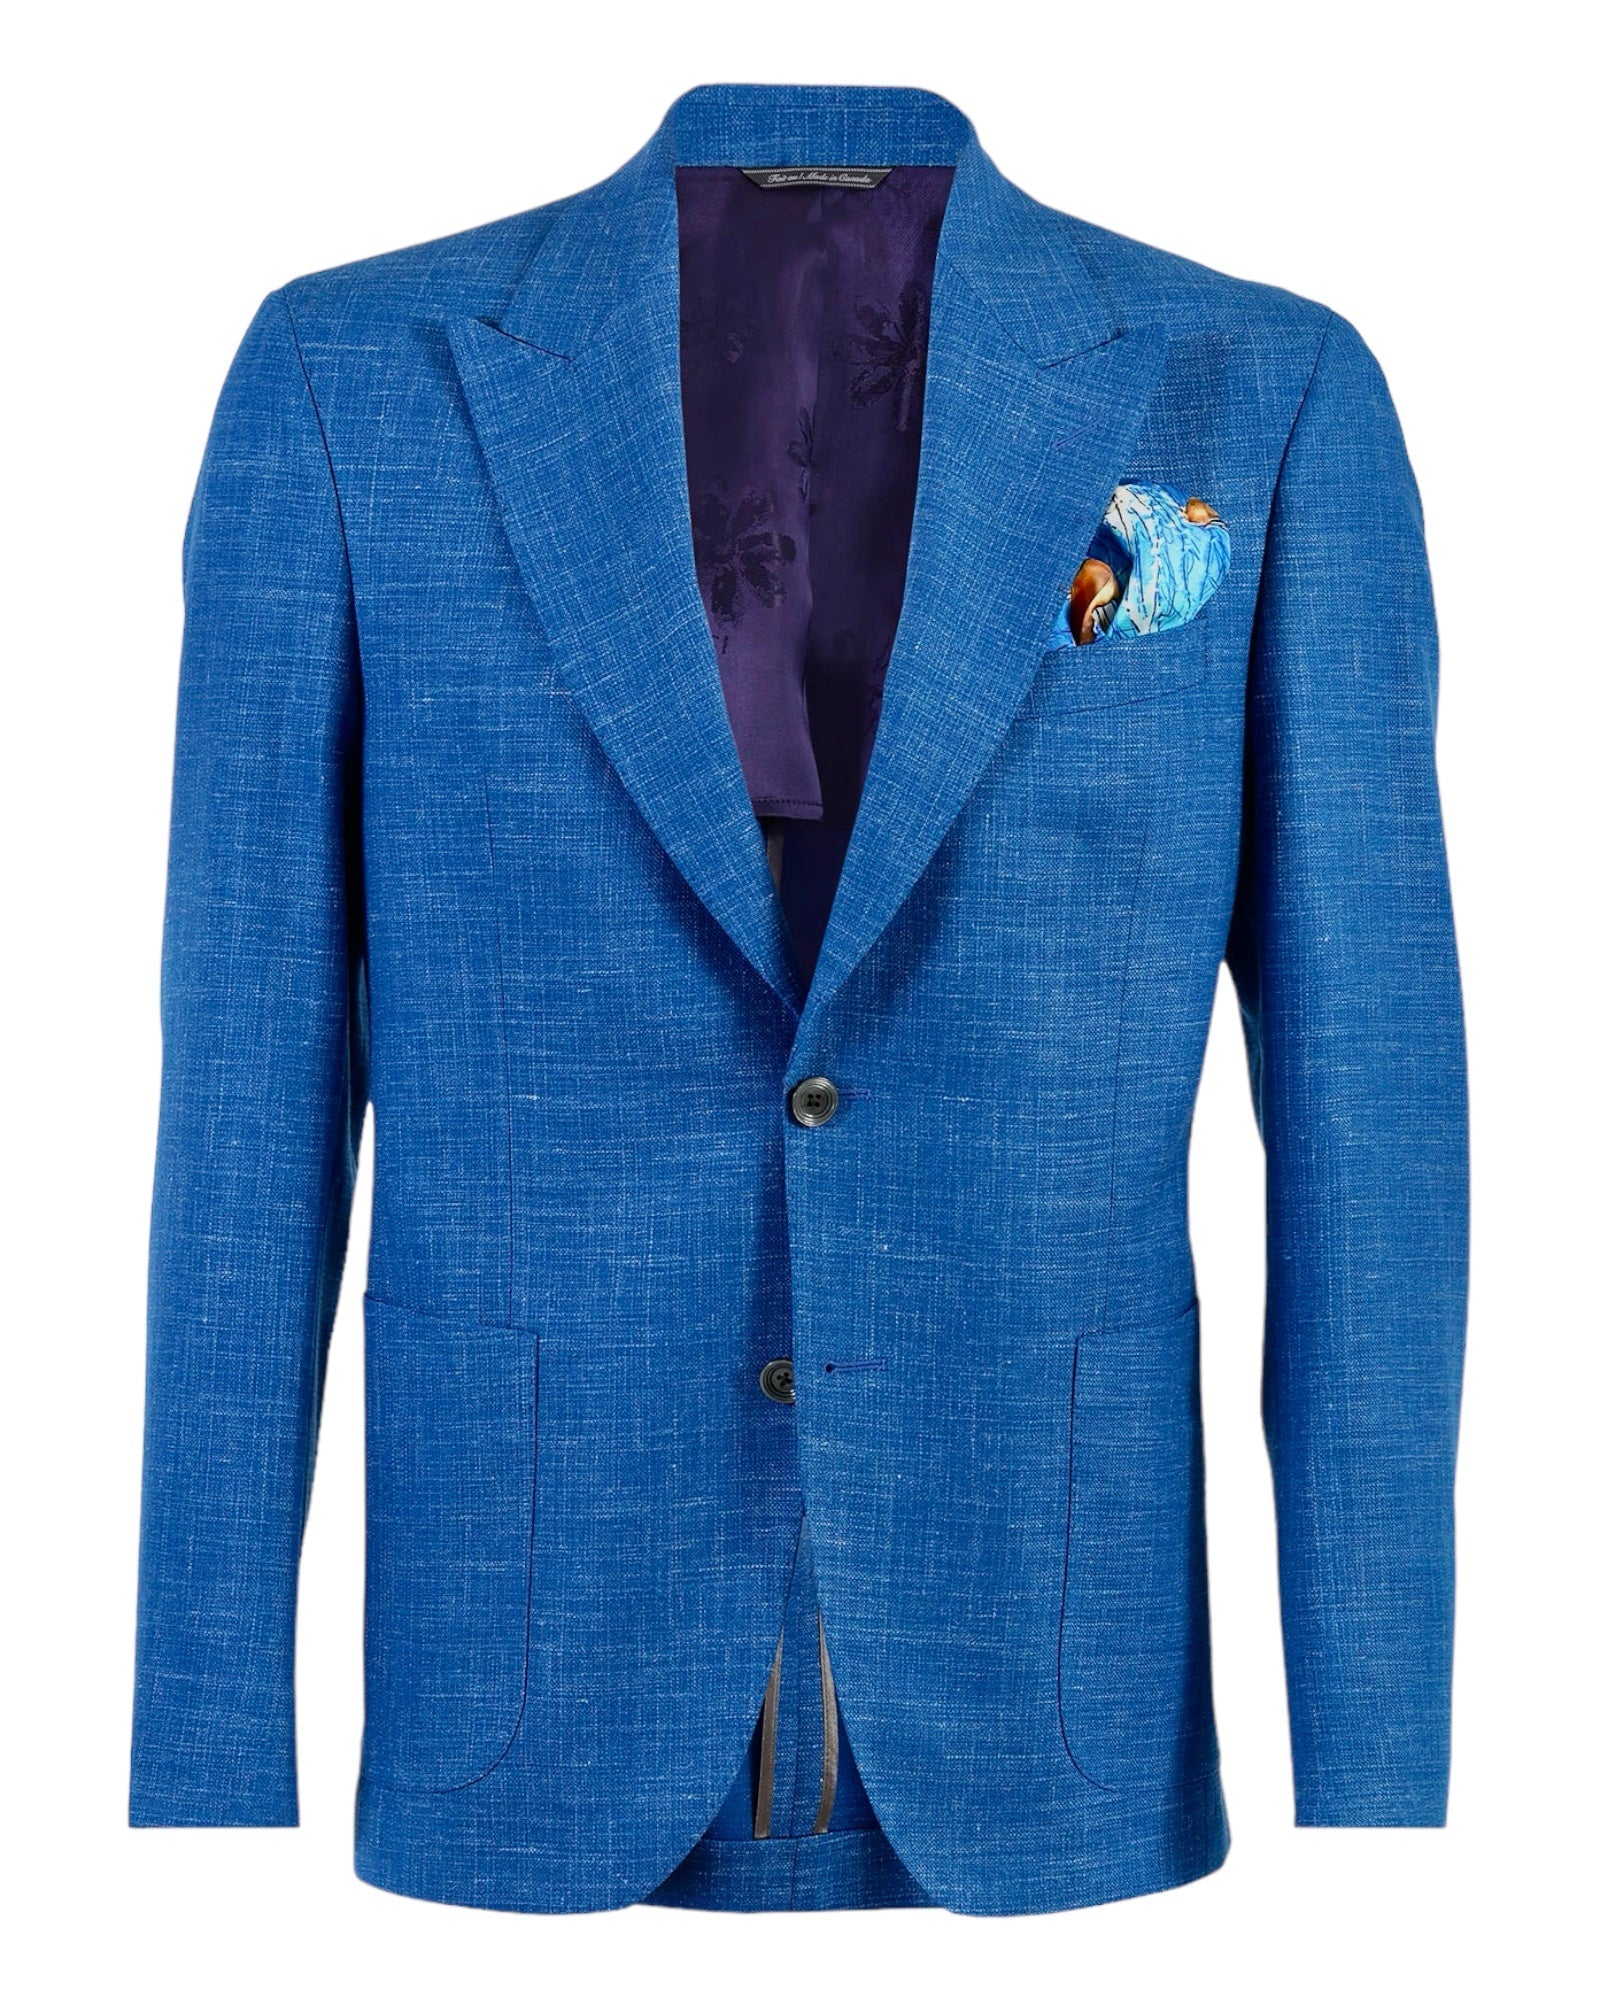 Peak Lapel Wool & Linen Blazer - Indigo Blue JACKETS42R